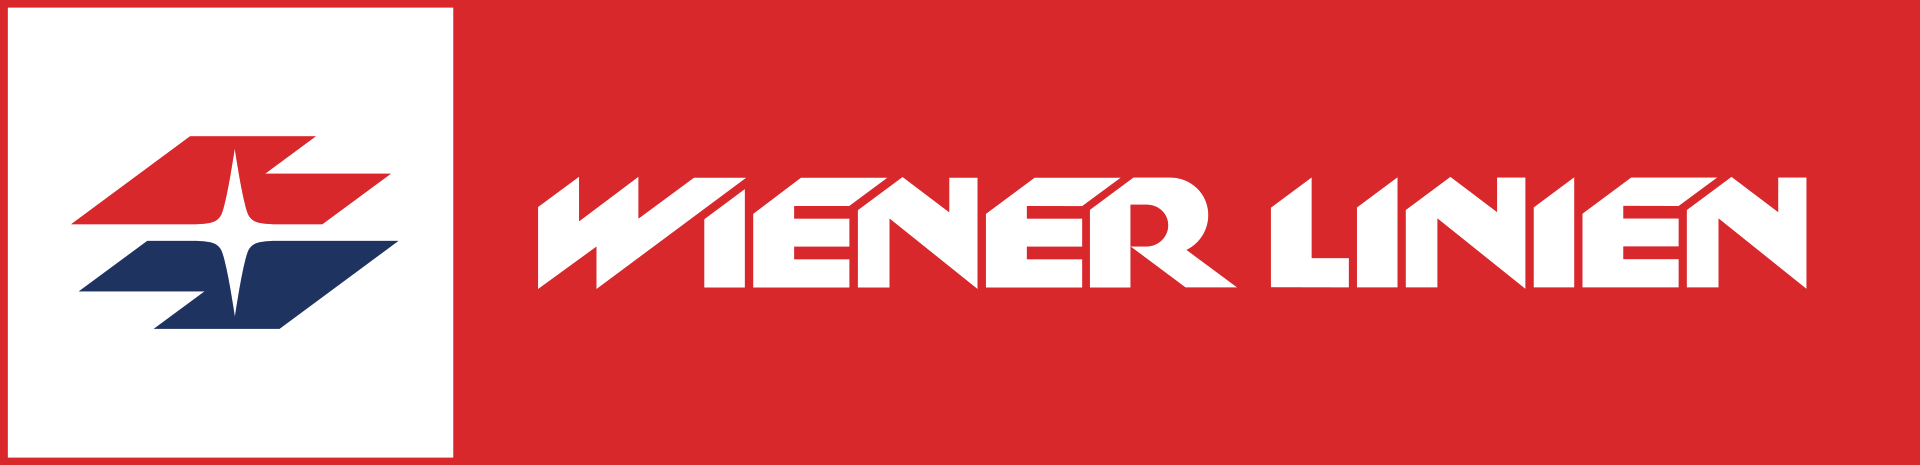 Wiener Linien Logo photo - 1